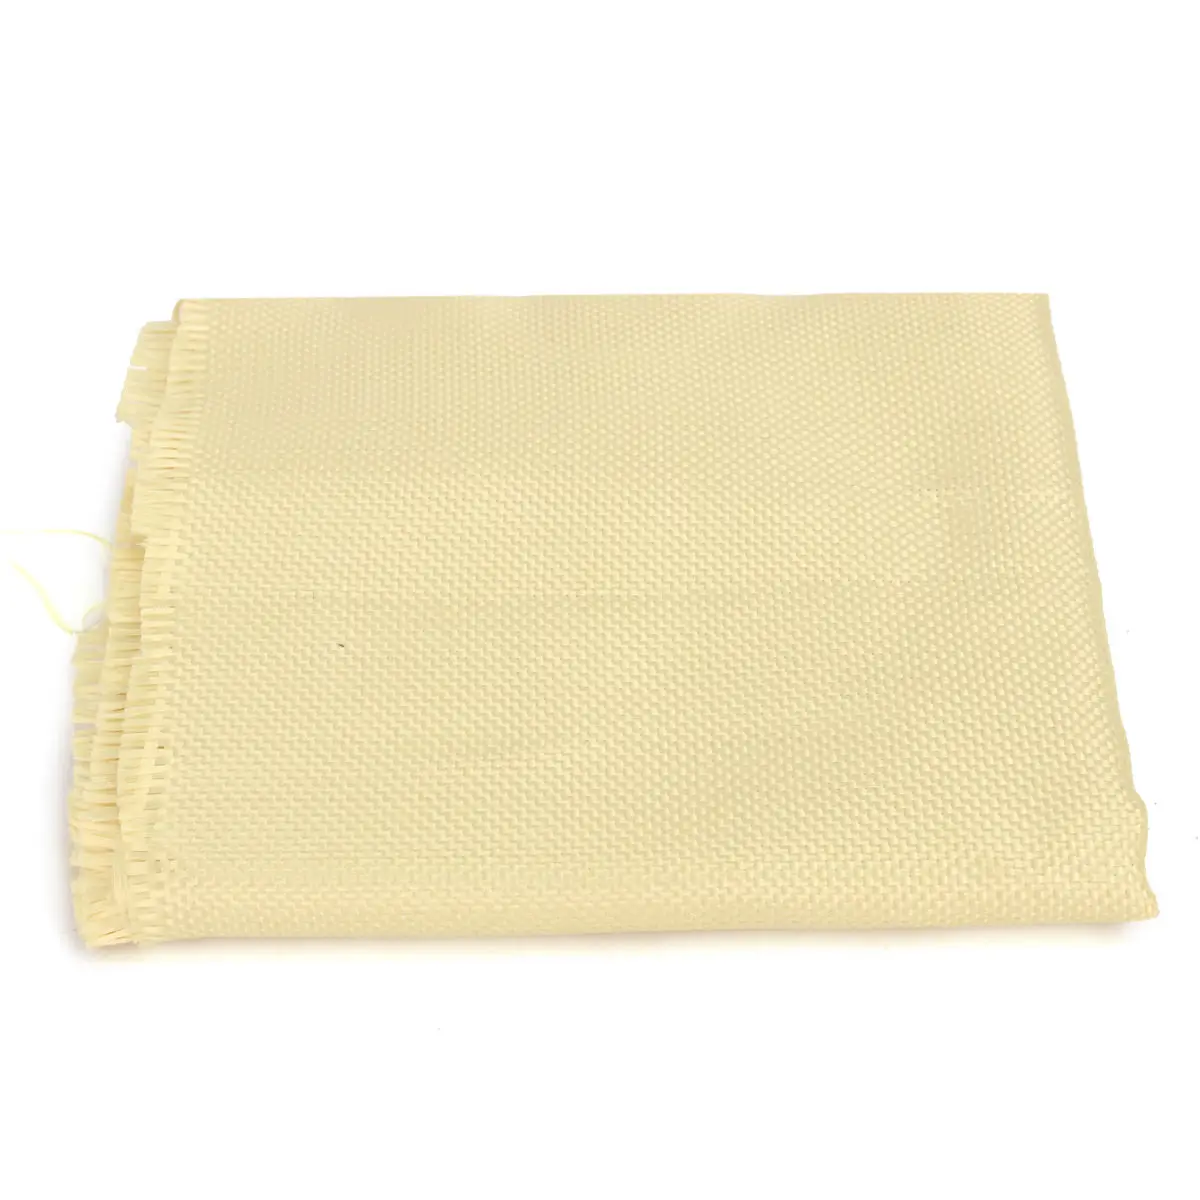 200gsm Woven Kevlar Fabric Woven Aramid Fiber Cloth Plain Color Yellow Twill Linear Density 1100 Dtex DIY Crafts 100*30cm Mayitr